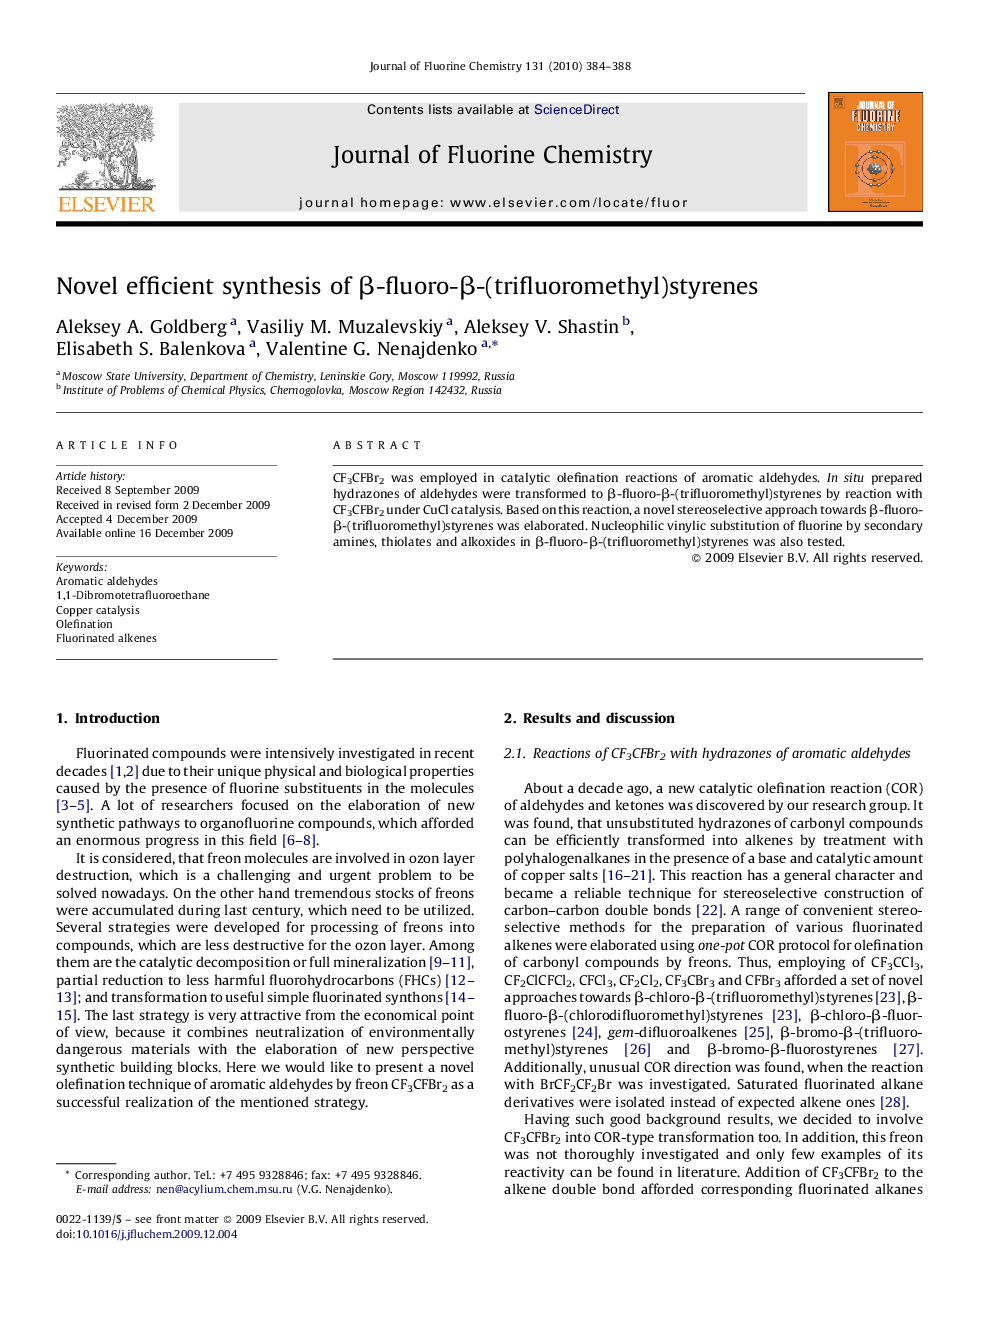 Novel efficient synthesis of β-fluoro-β-(trifluoromethyl)styrenes